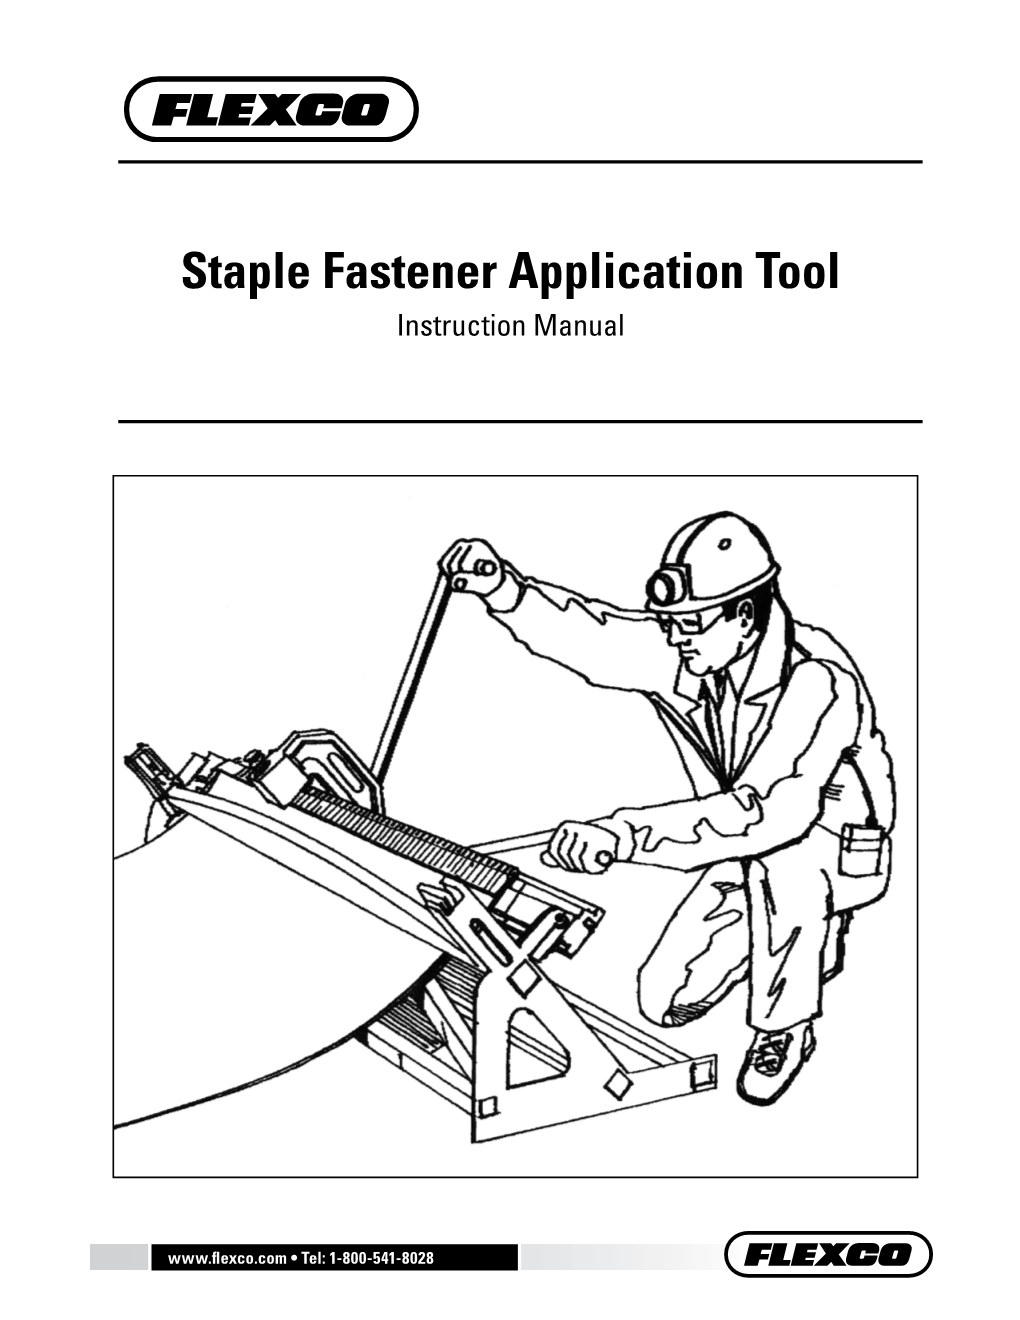 Staple Fastener Application Tool Instruction Manual